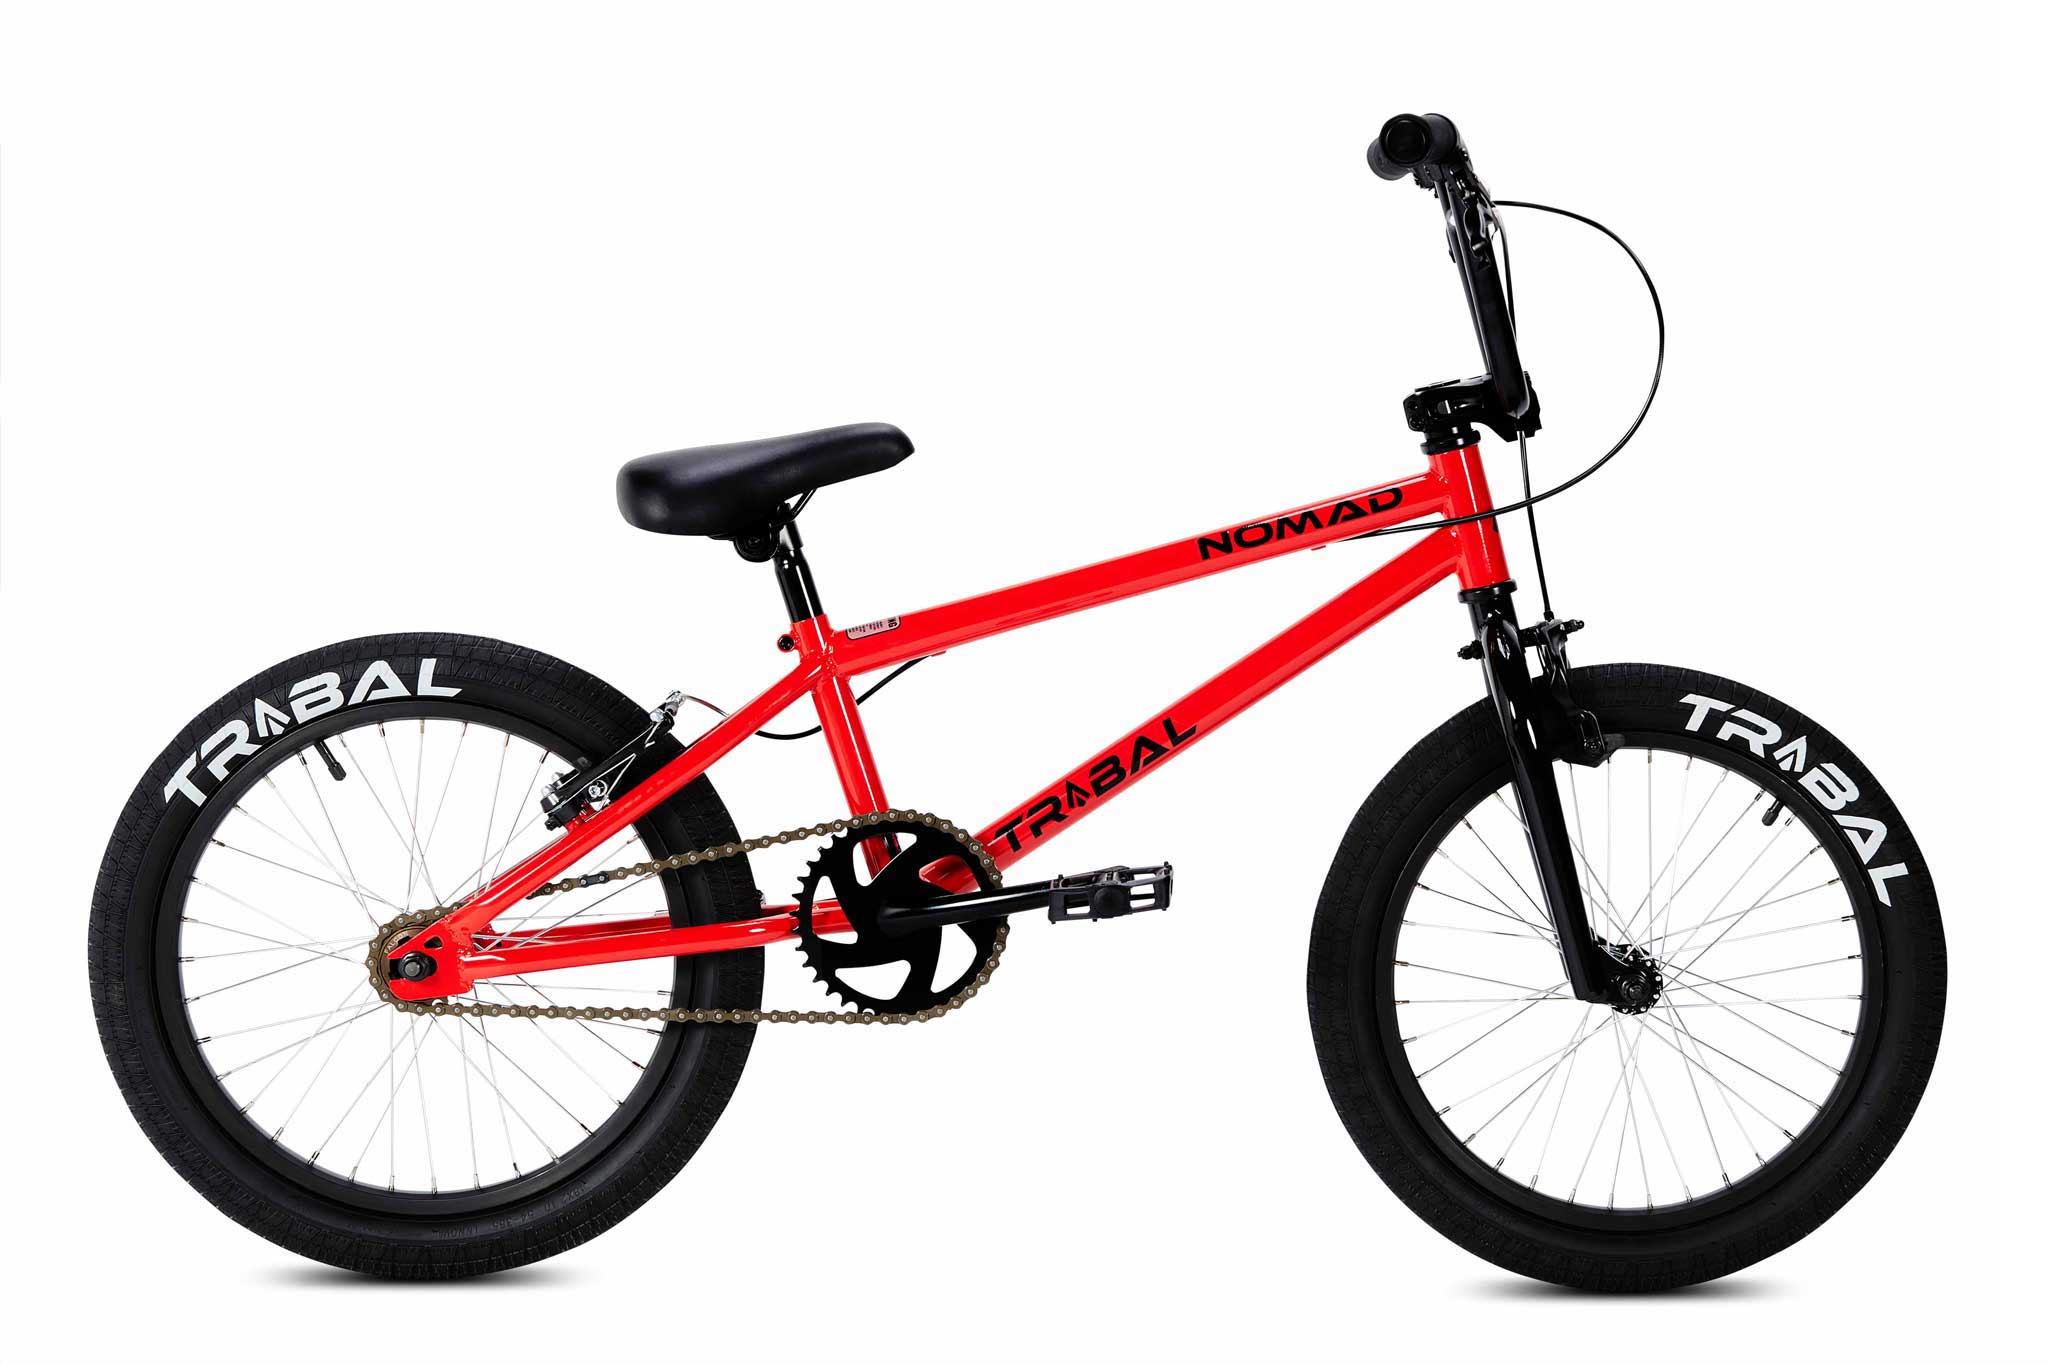 Tribal Nomad 18" BMX Bike - Red